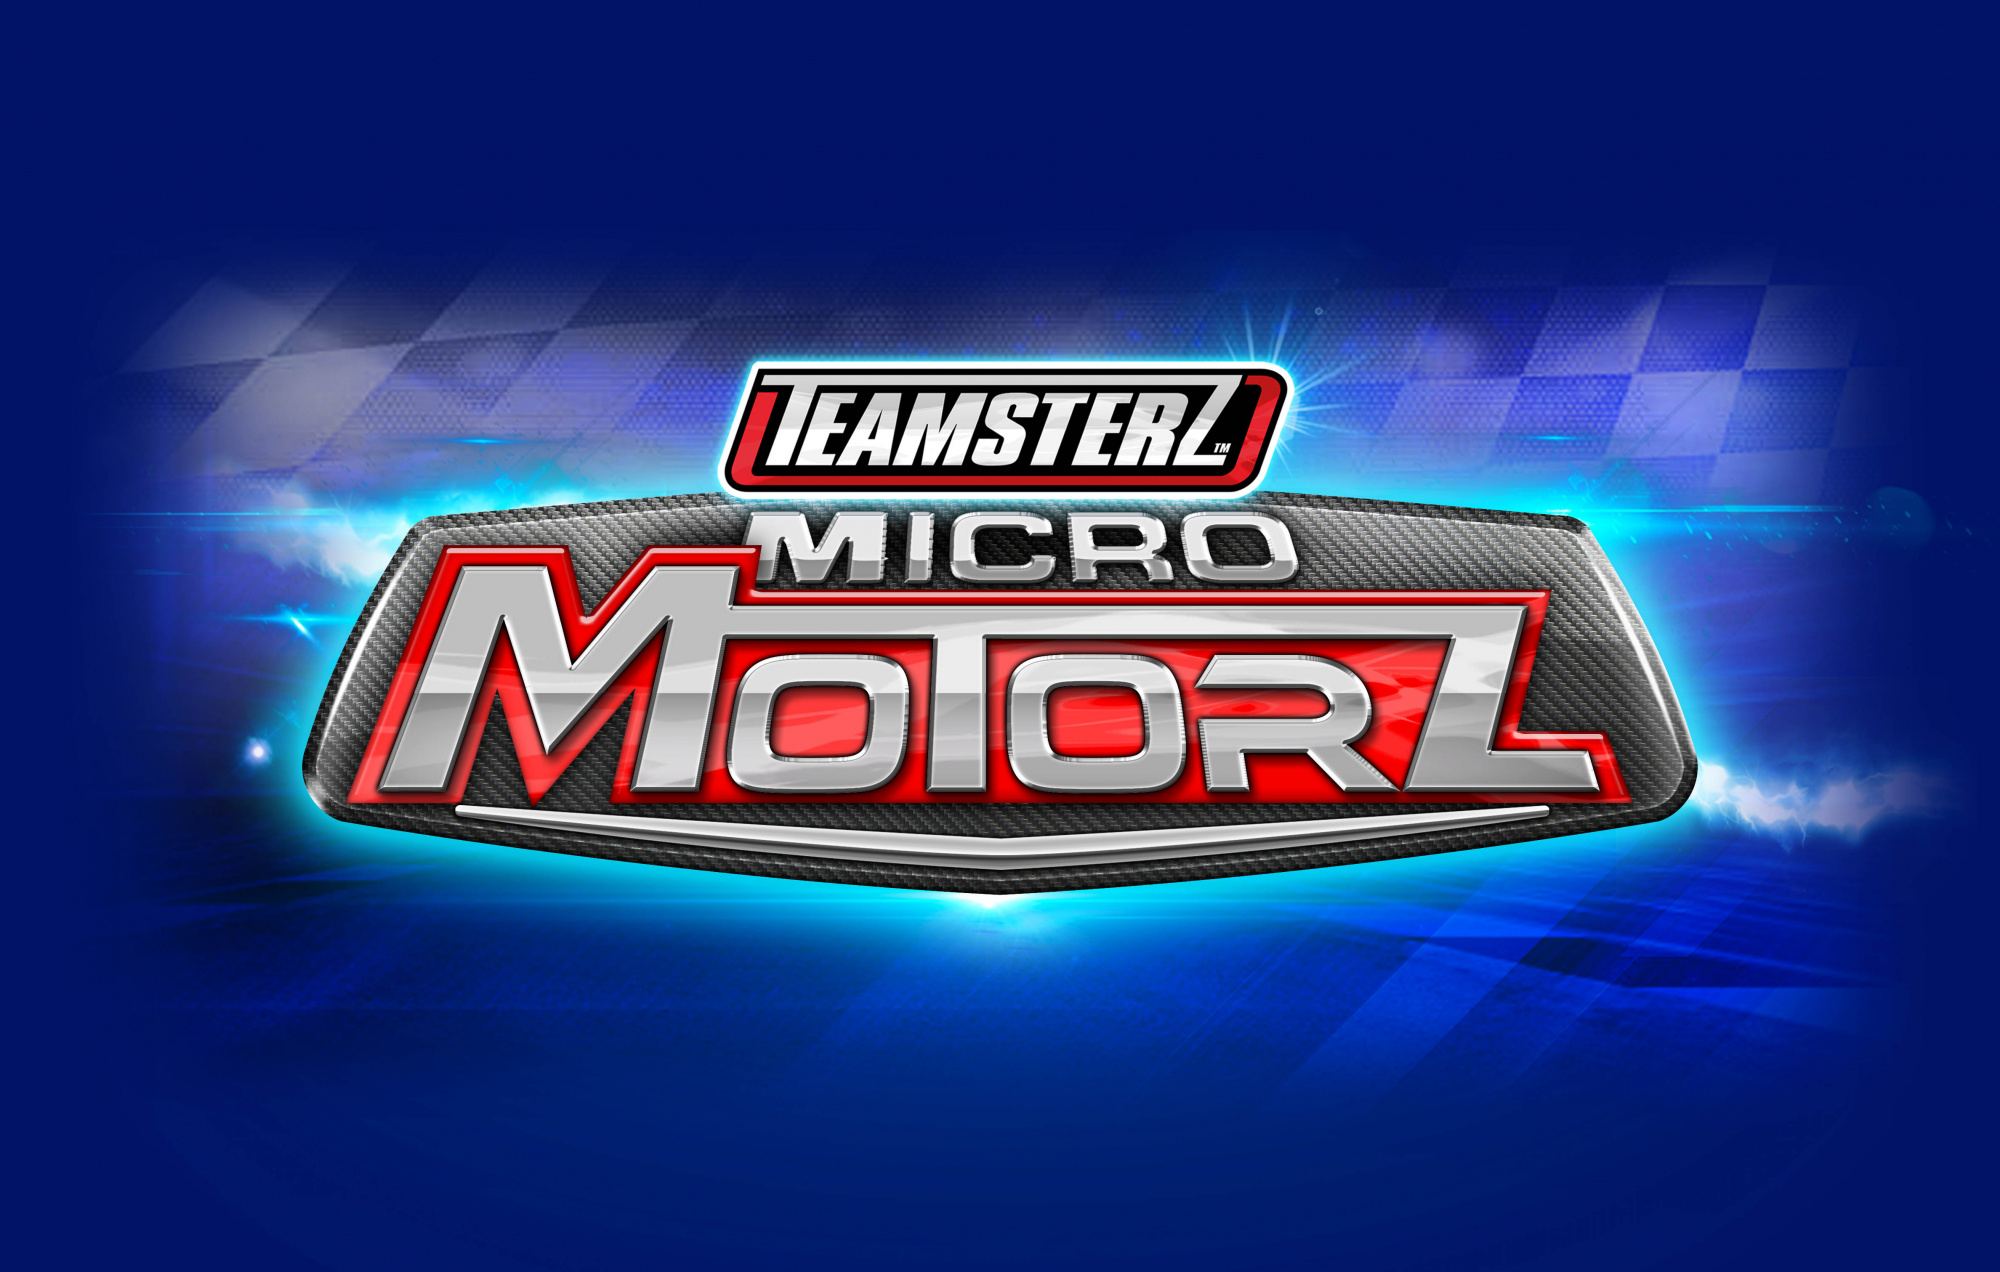 Teamstez Micro Motorz